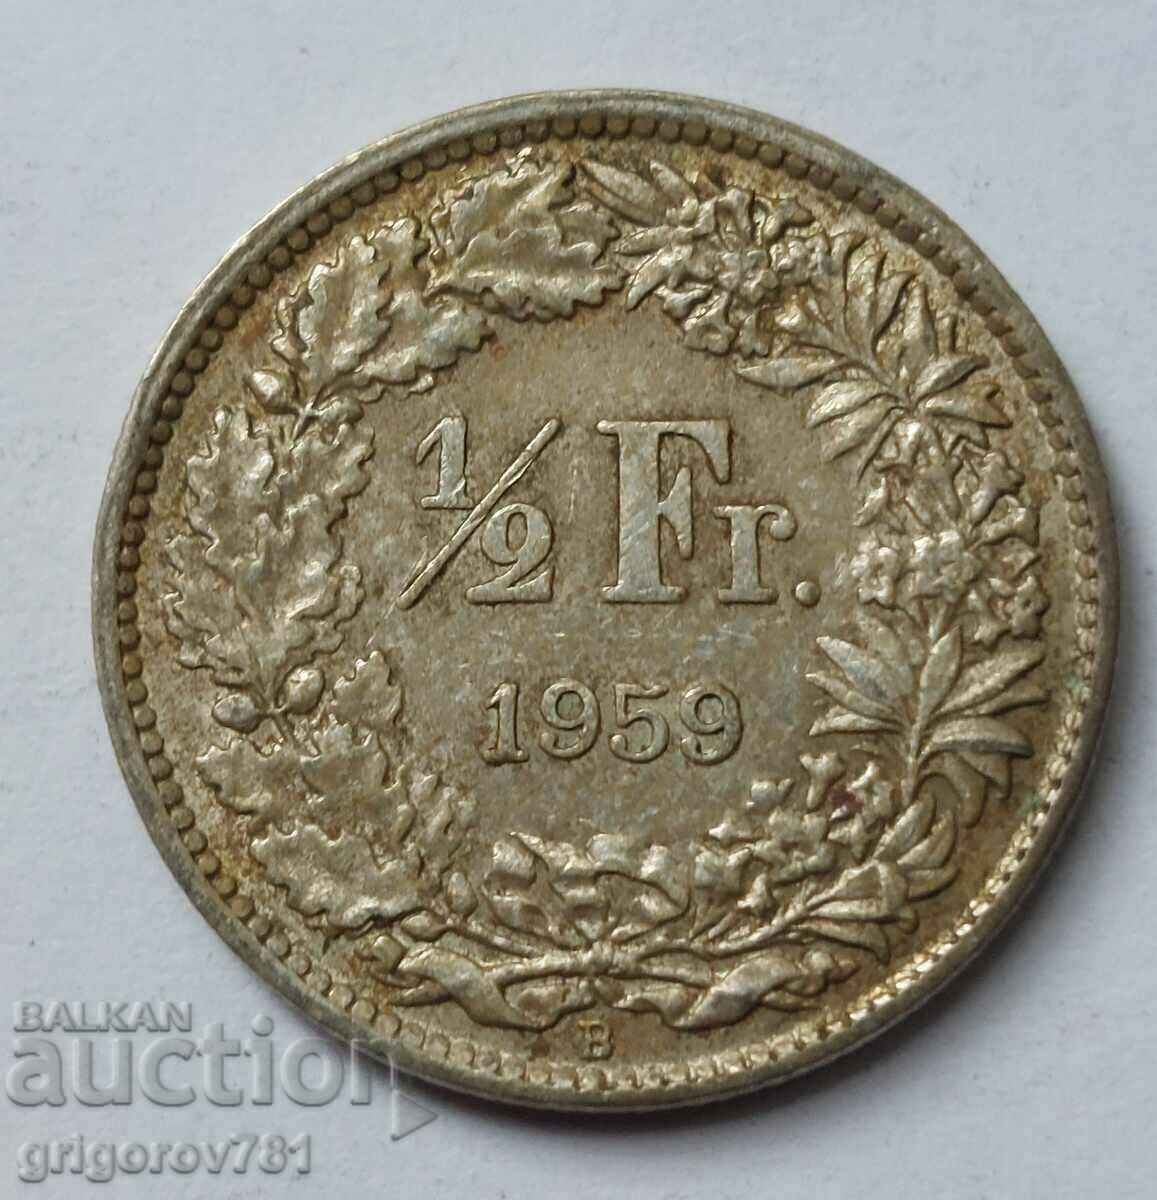 1/2 Franc Silver Switzerland 1959 B - Silver Coin #50